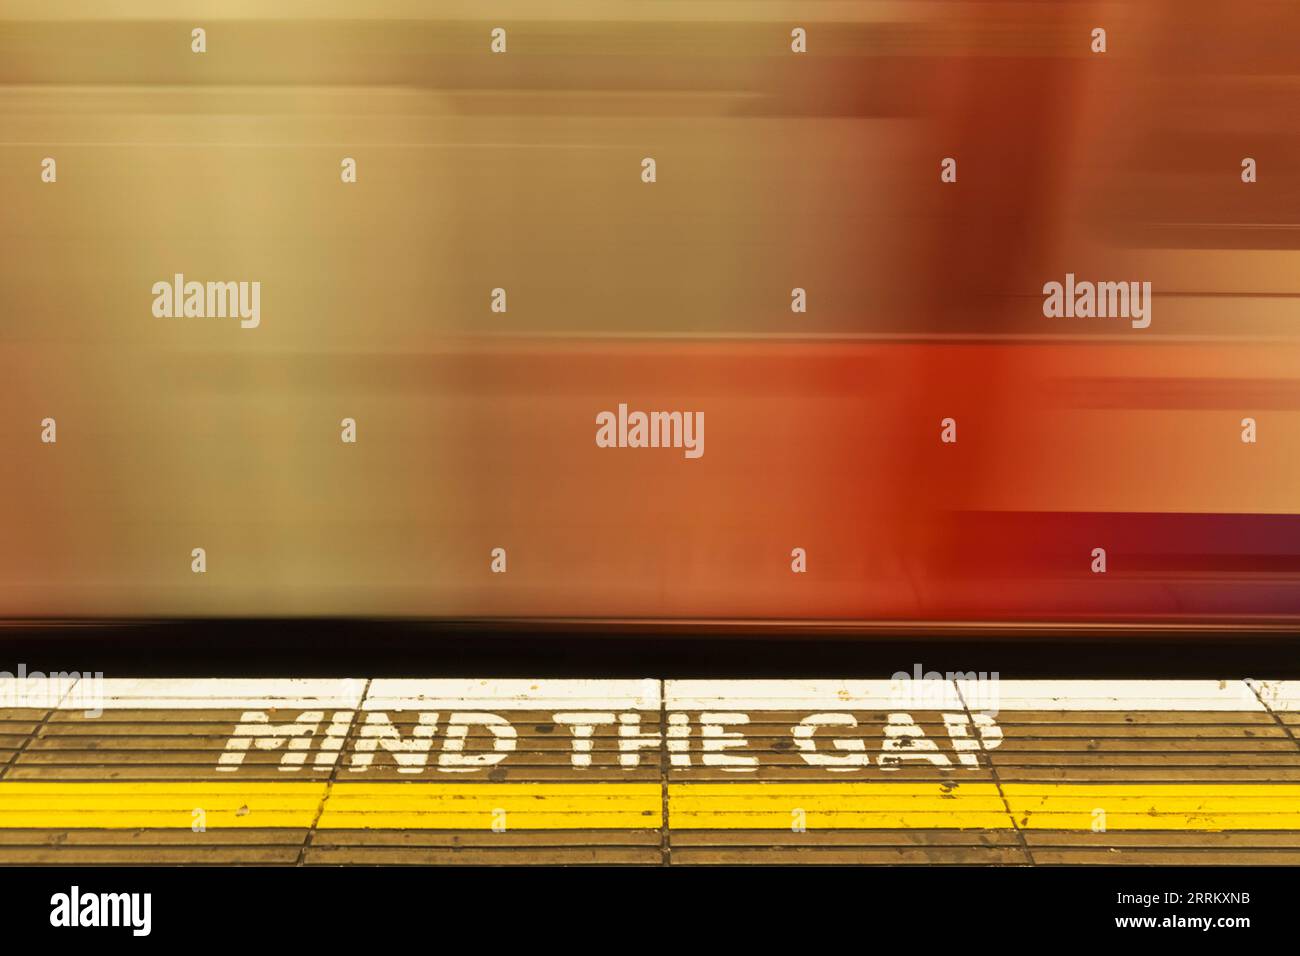 Angleterre, Londres, métro de Londres, Moving train with Mind the Gap Sign Banque D'Images